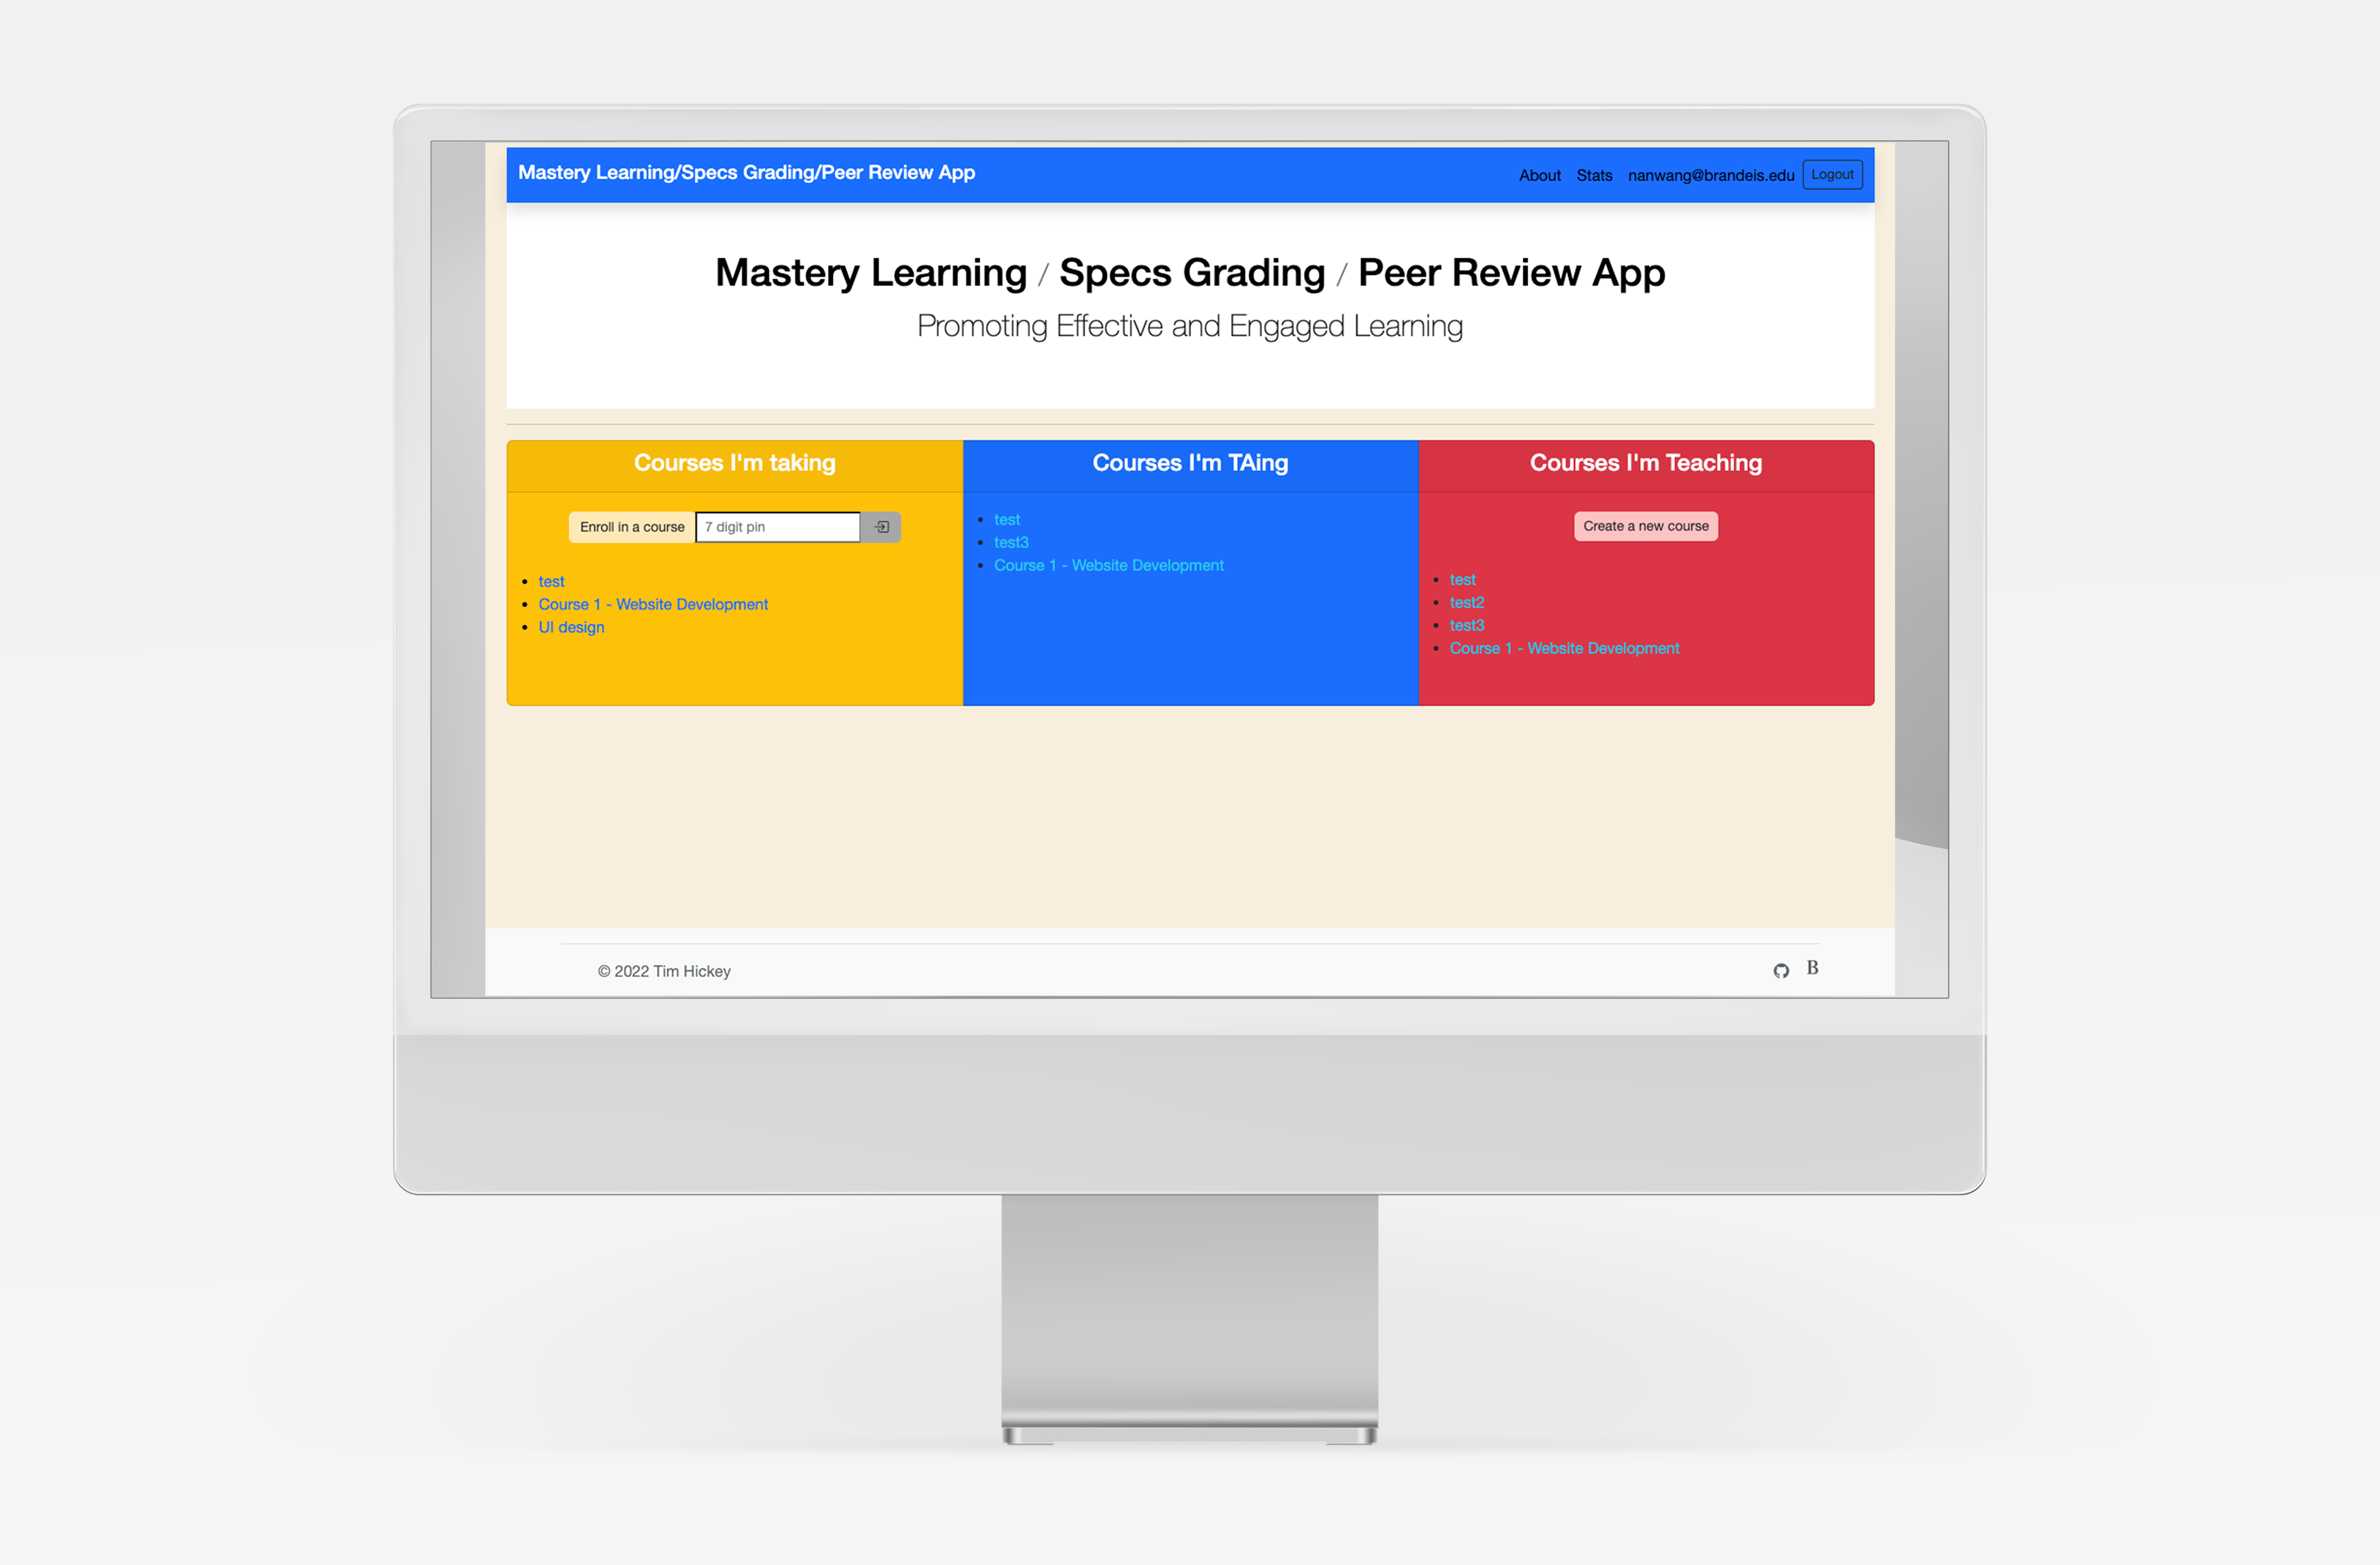 Mastery, Learning/Specs Grading/Peer Review App